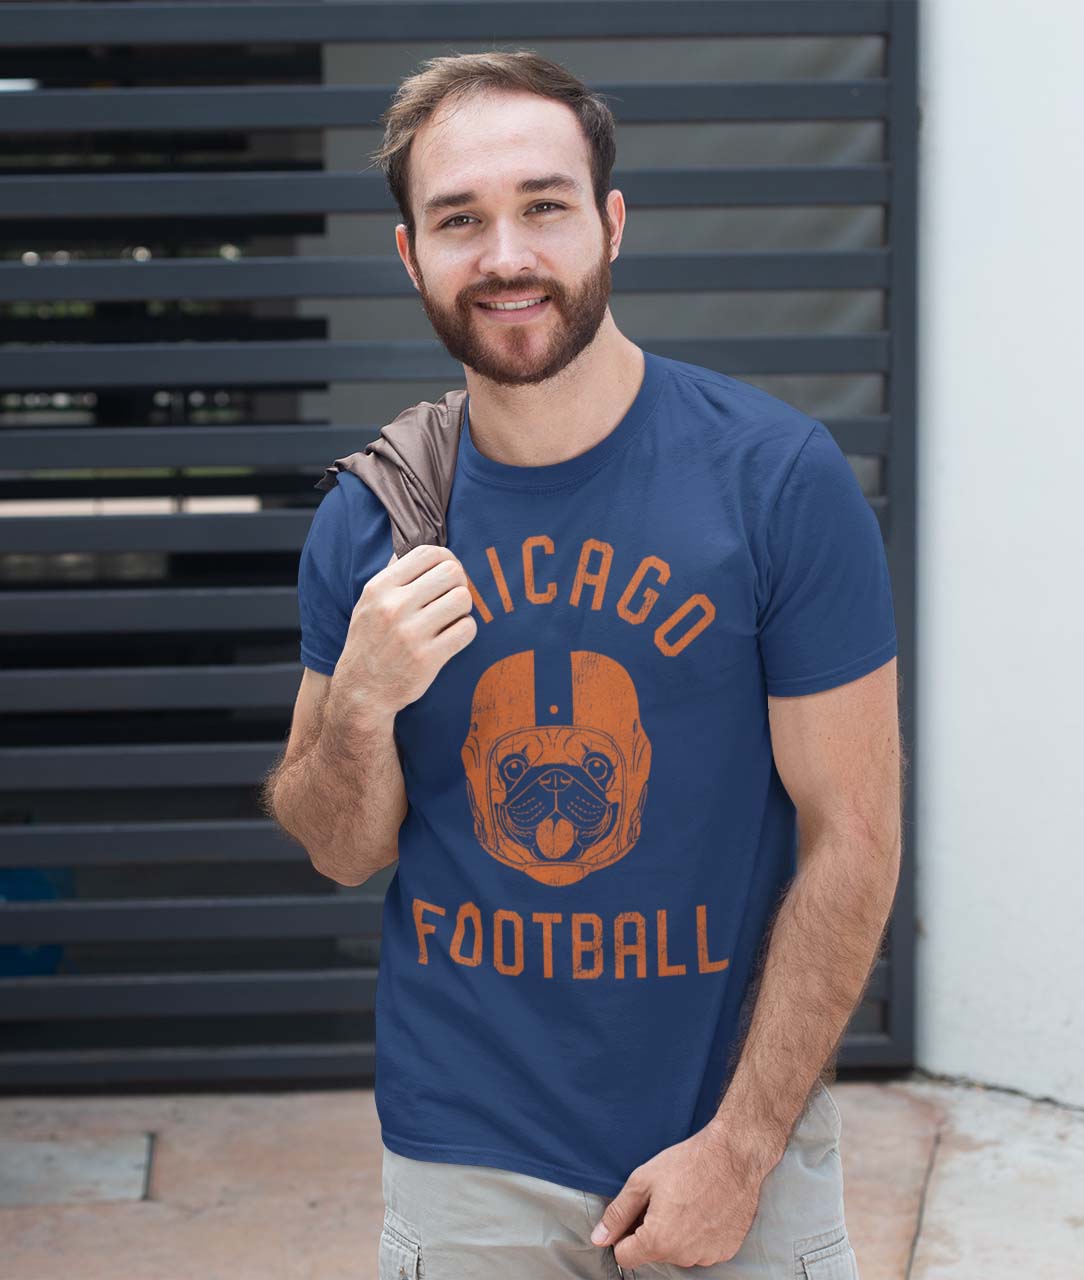 Chicago Football Pug T-Shirt